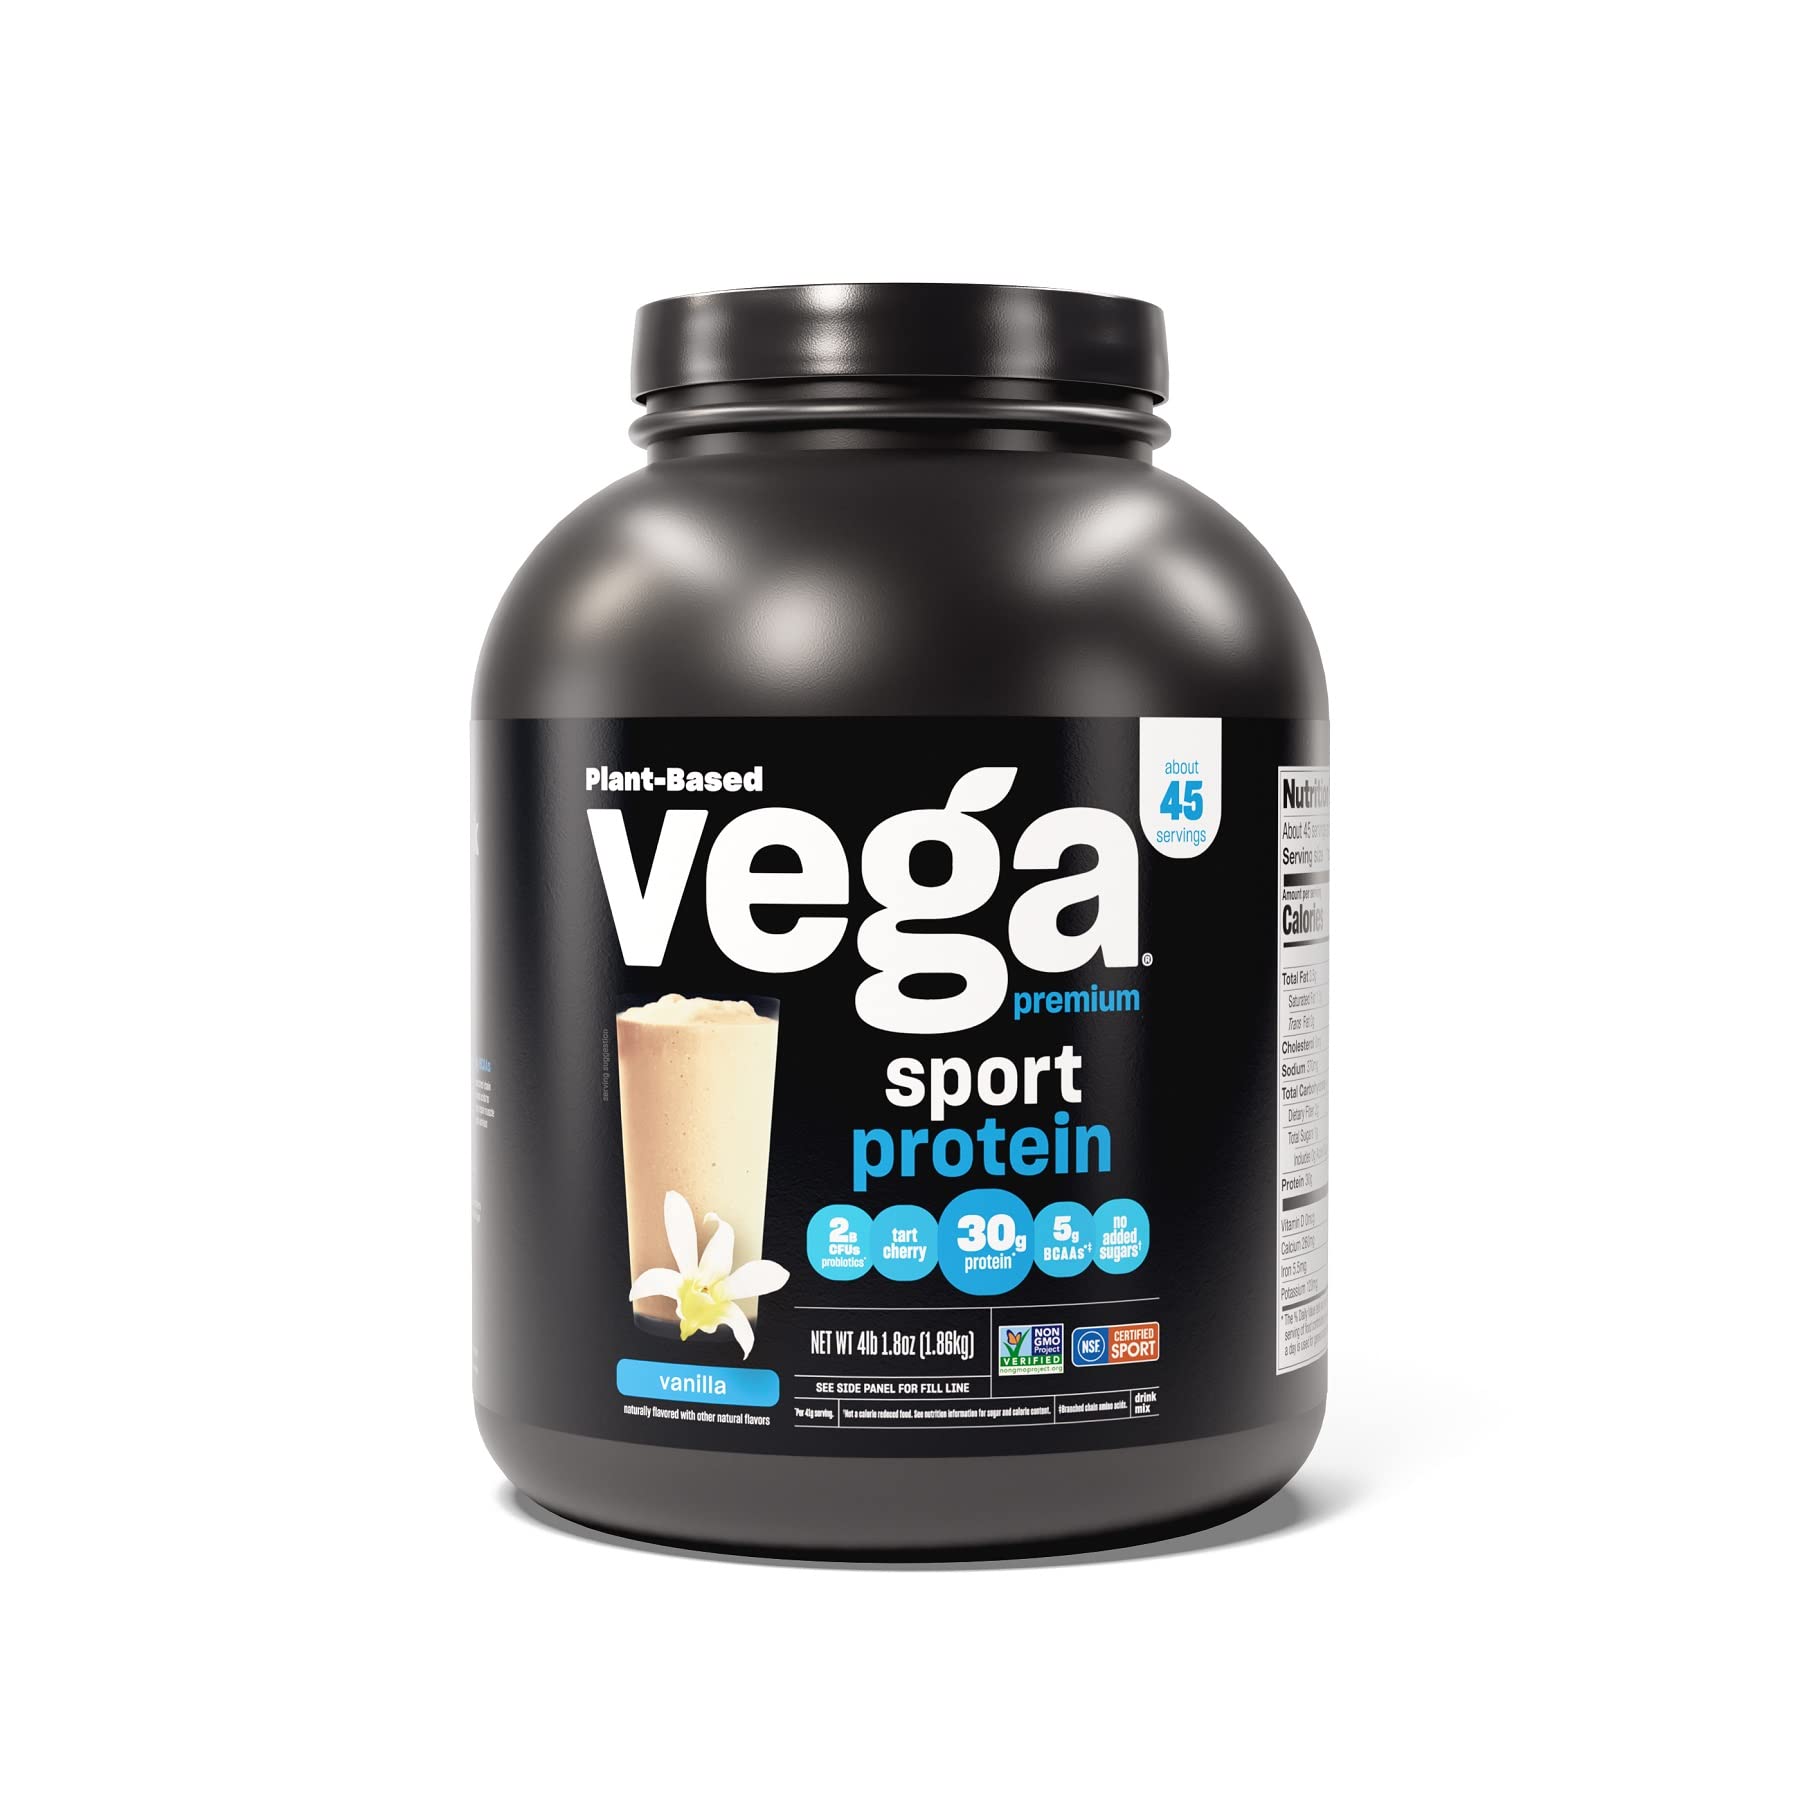  65.8-Oz Vega Sport Premium Plant Based Protein Powder (Vanilla) & More from $46.18 w/ S&S + Free Shipping